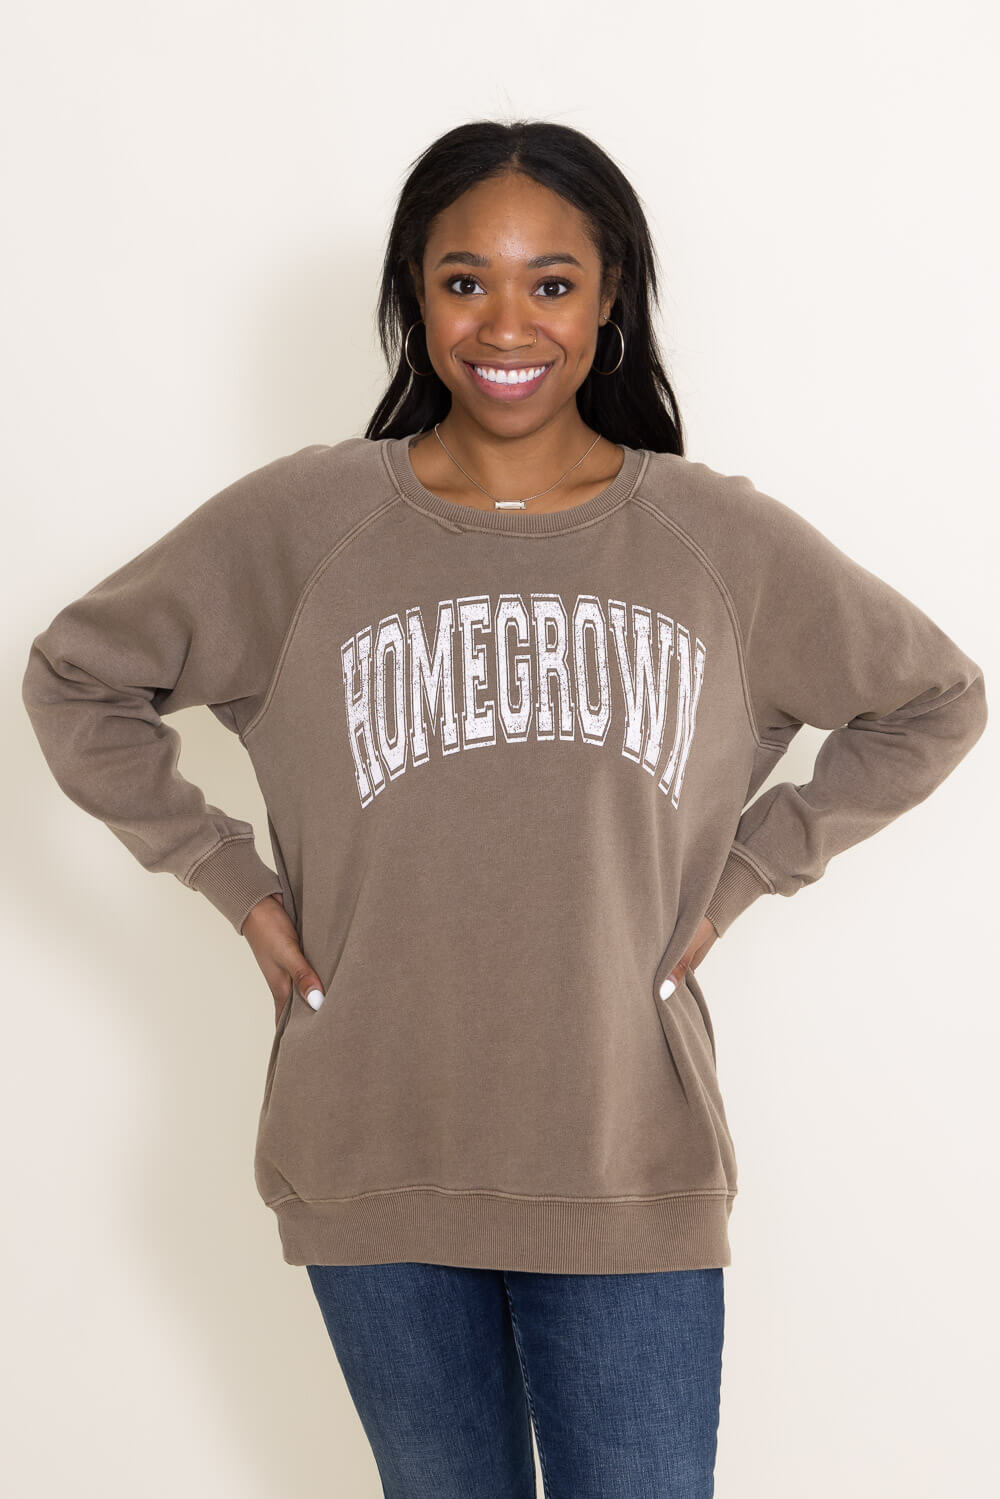 Thread & Supply Homegrown Graphic Sweatshirt for Women in Brown